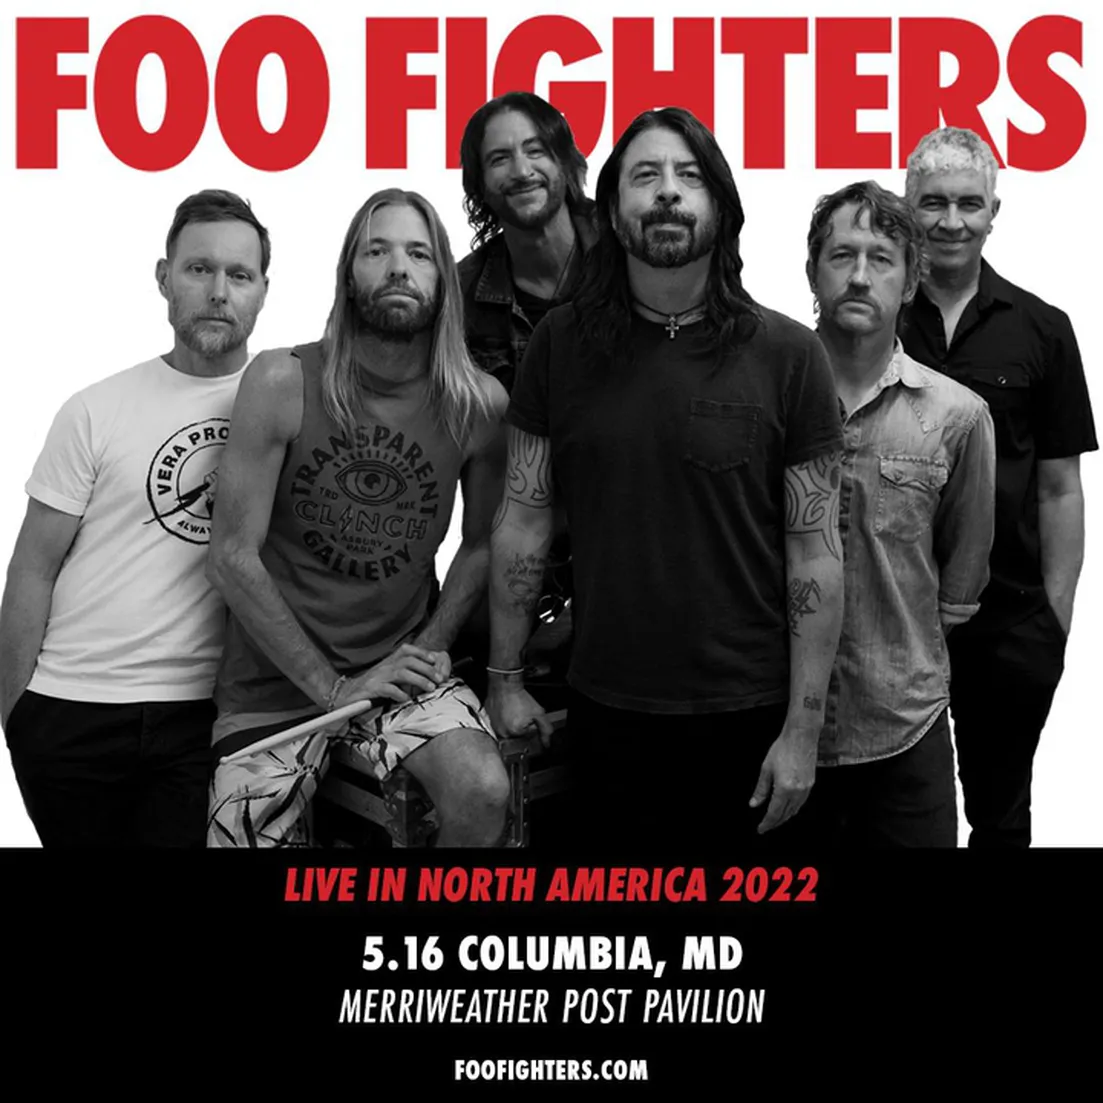 Merriweather Schedule 2022 Foo Fighters Tickets - Merriweather Post Pavilion, May 16, 2022 -  Bandsintown